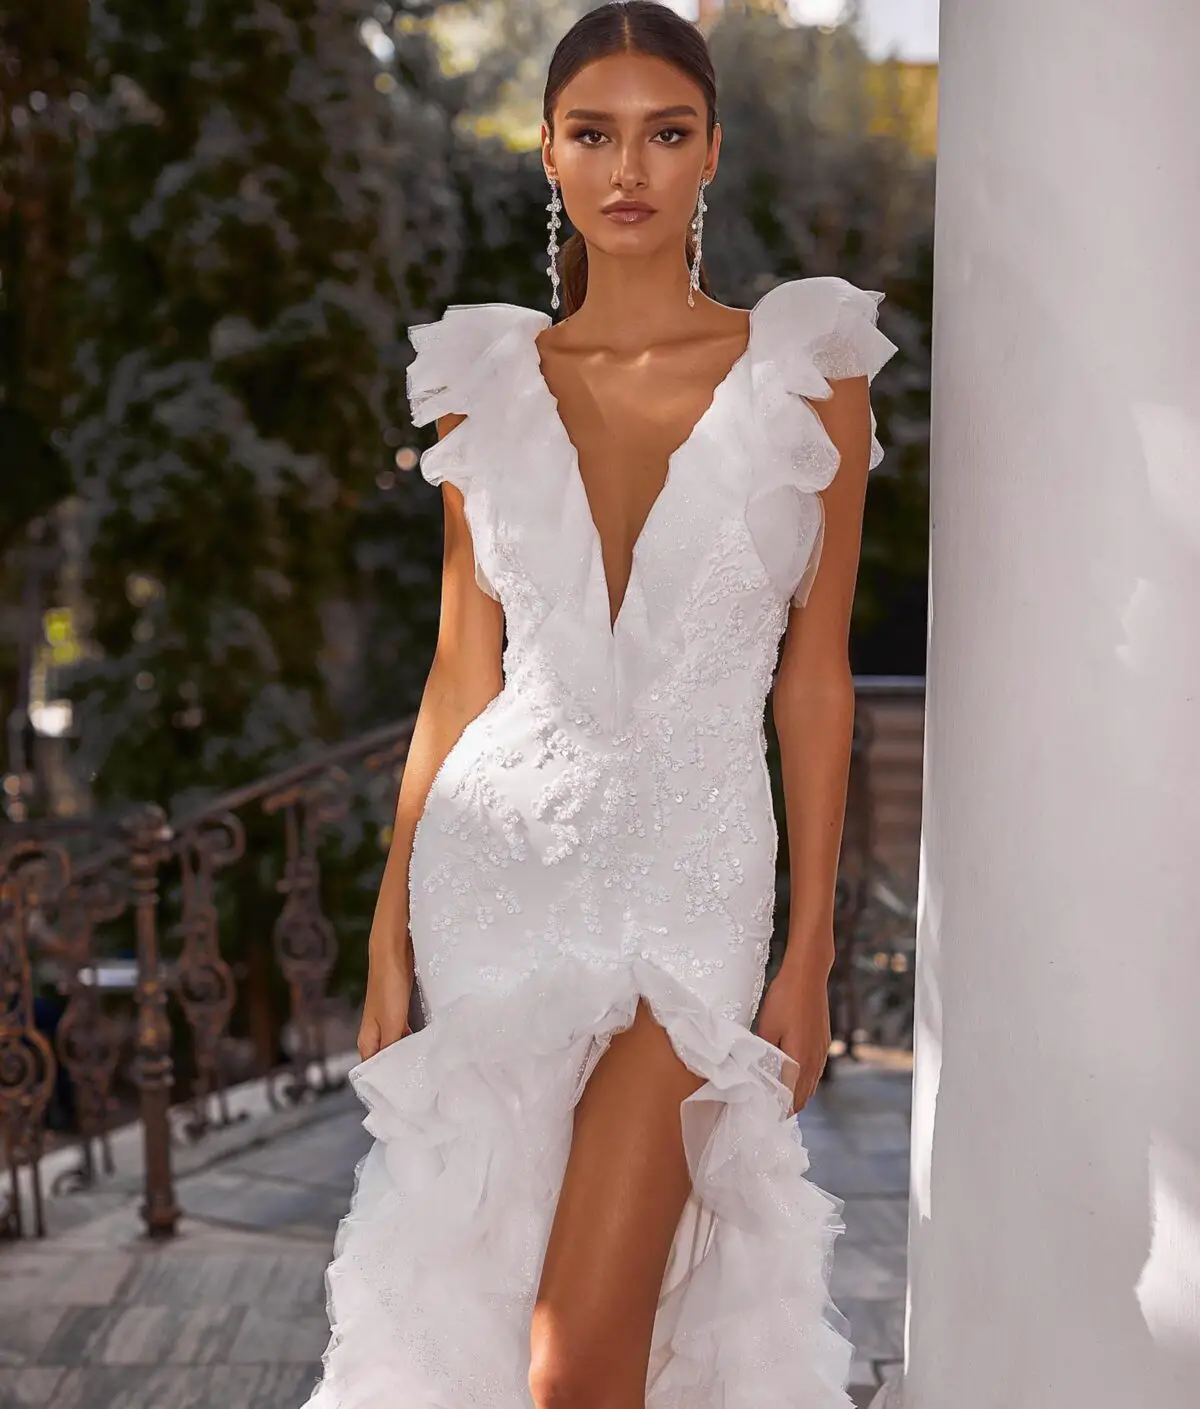 Ilaria by Katy Corso wedding dress